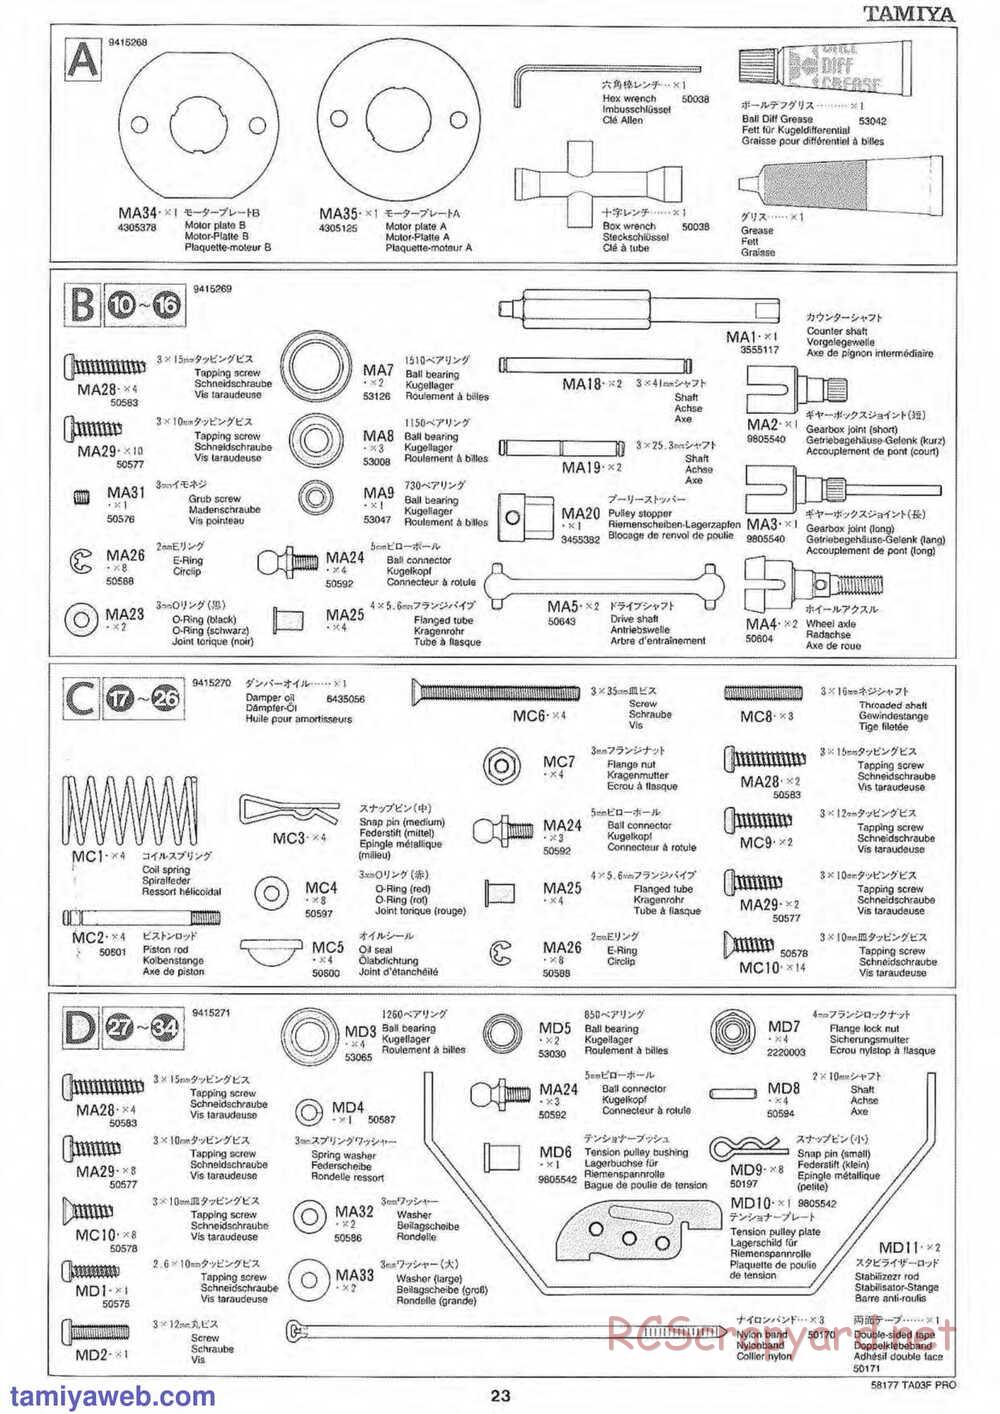 Tamiya - TA-03F Pro Chassis - Manual - Page 23